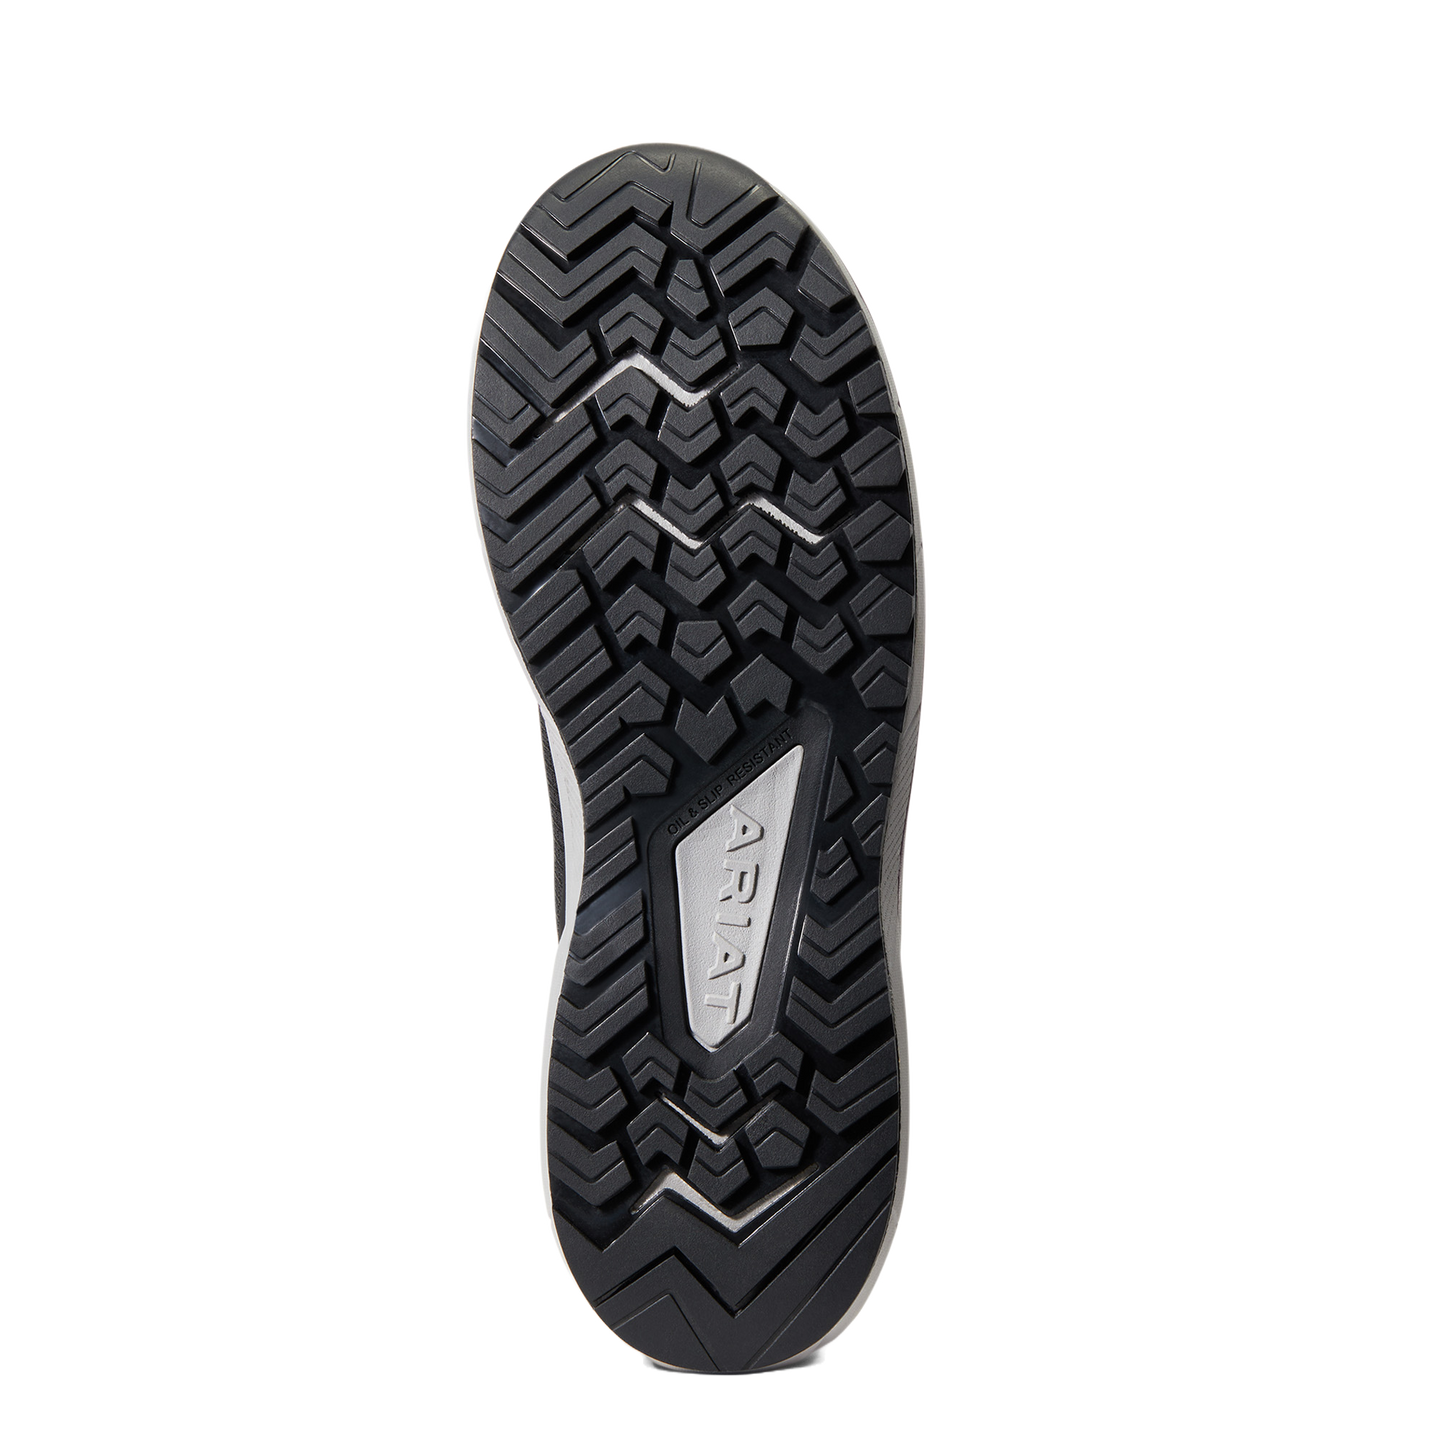 Ariat Ladies Outpace Black & Shadow Purple Composite Toe Sneakers 10040323